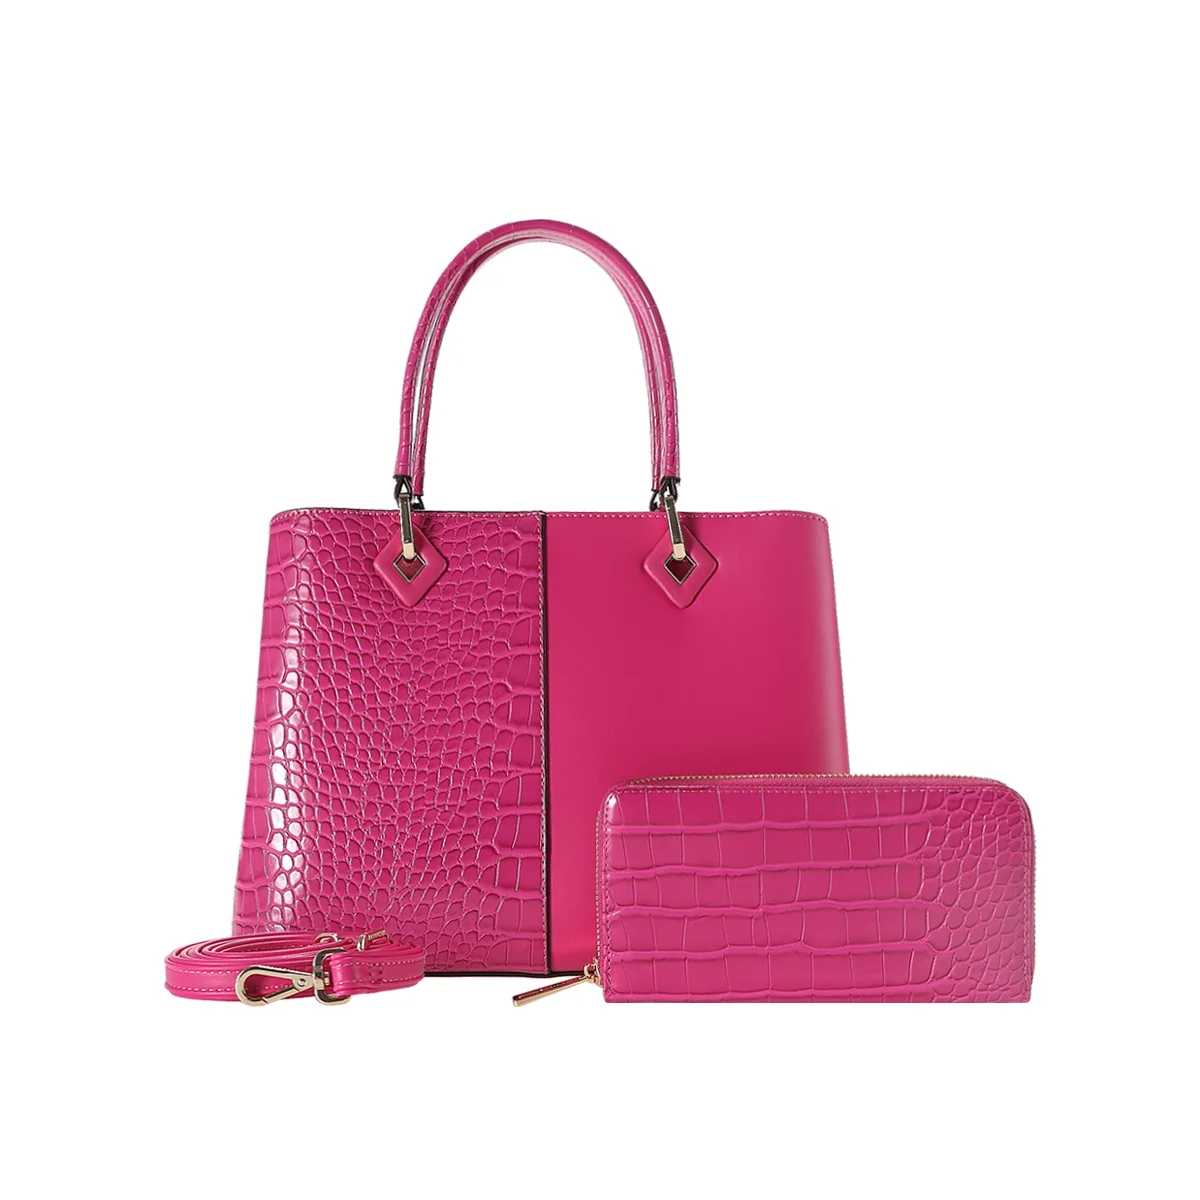 

SUSEN CHRISBELLA 2023 New Arrival bags and handbags fashion latest ladies office handbags for women